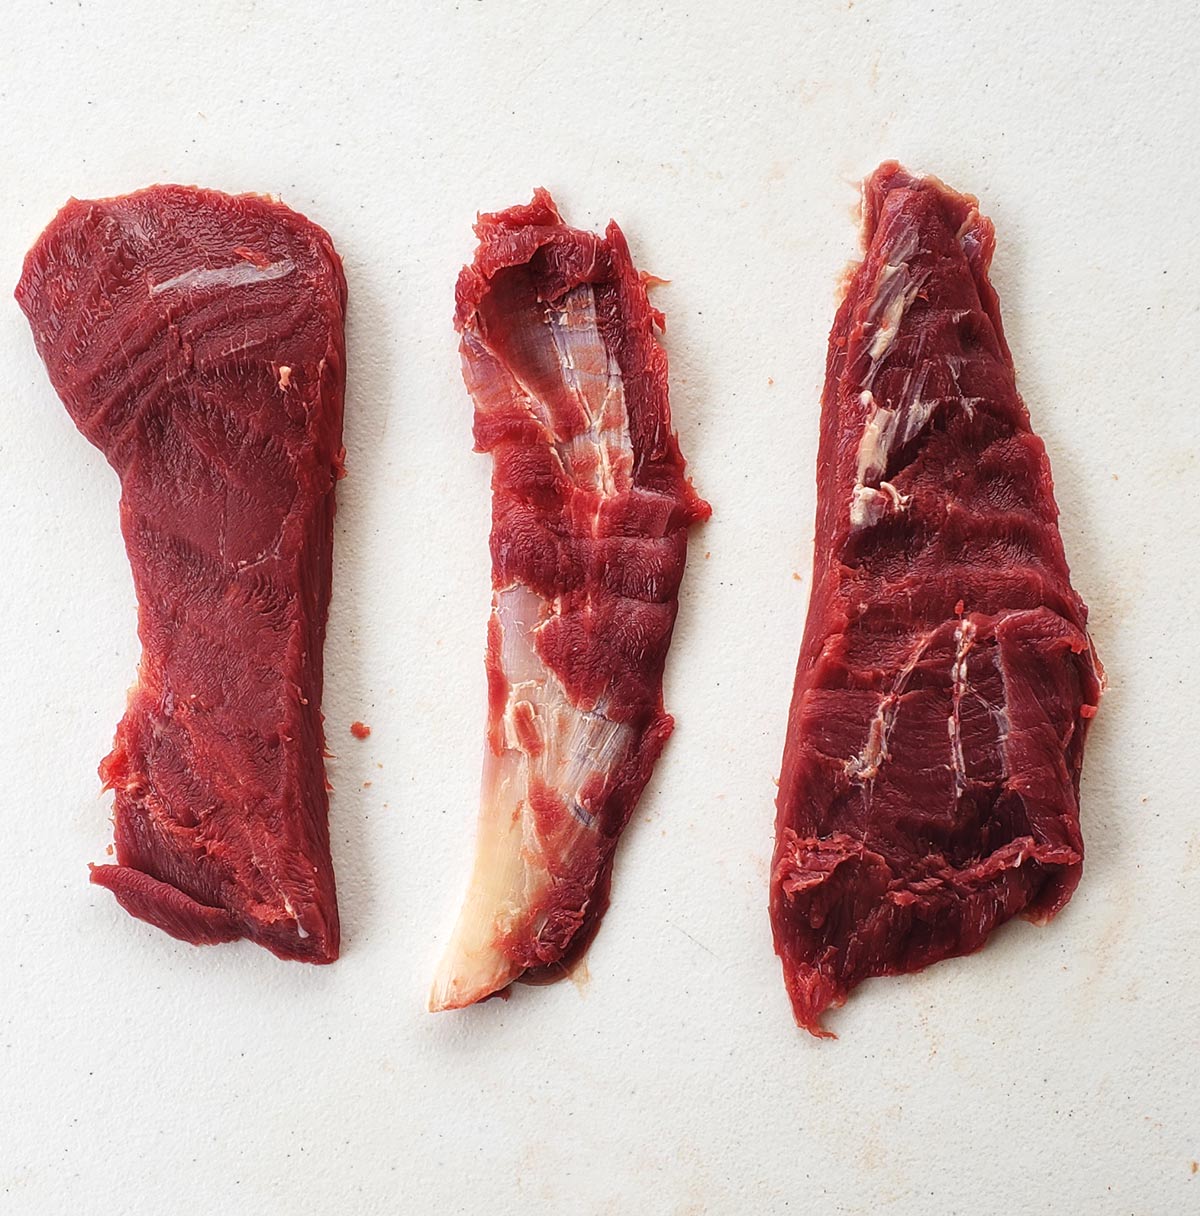 Flat iron steak cut from the blade roast. 